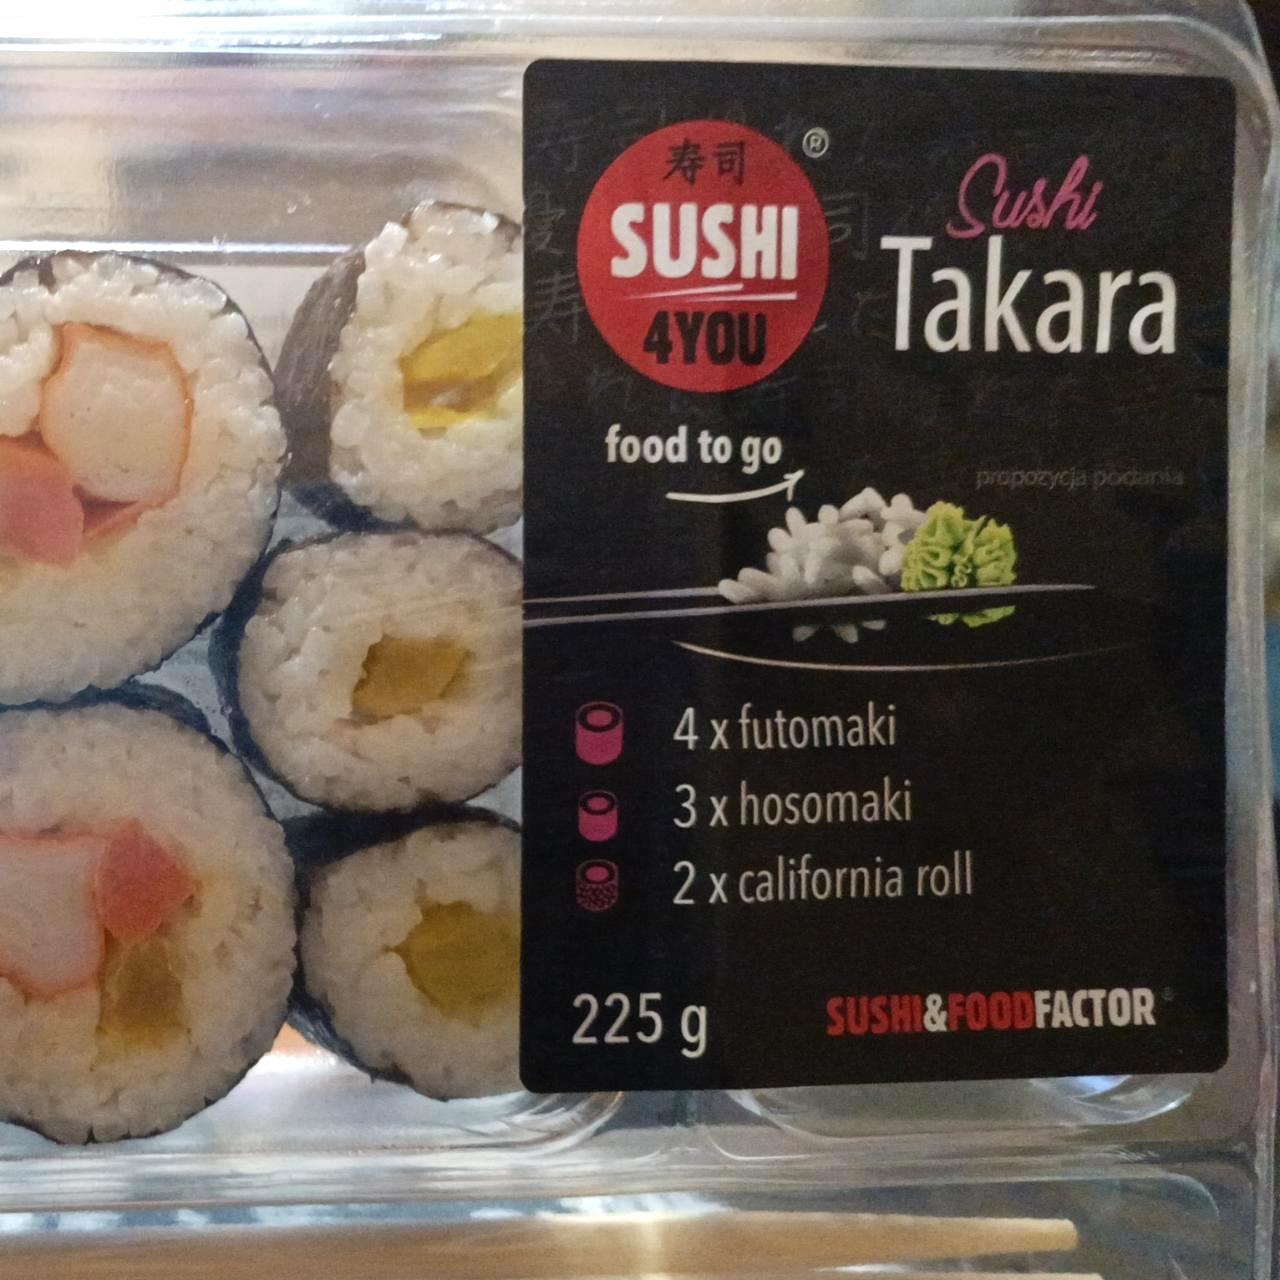 Képek - Sushi Takara Sushi 4you